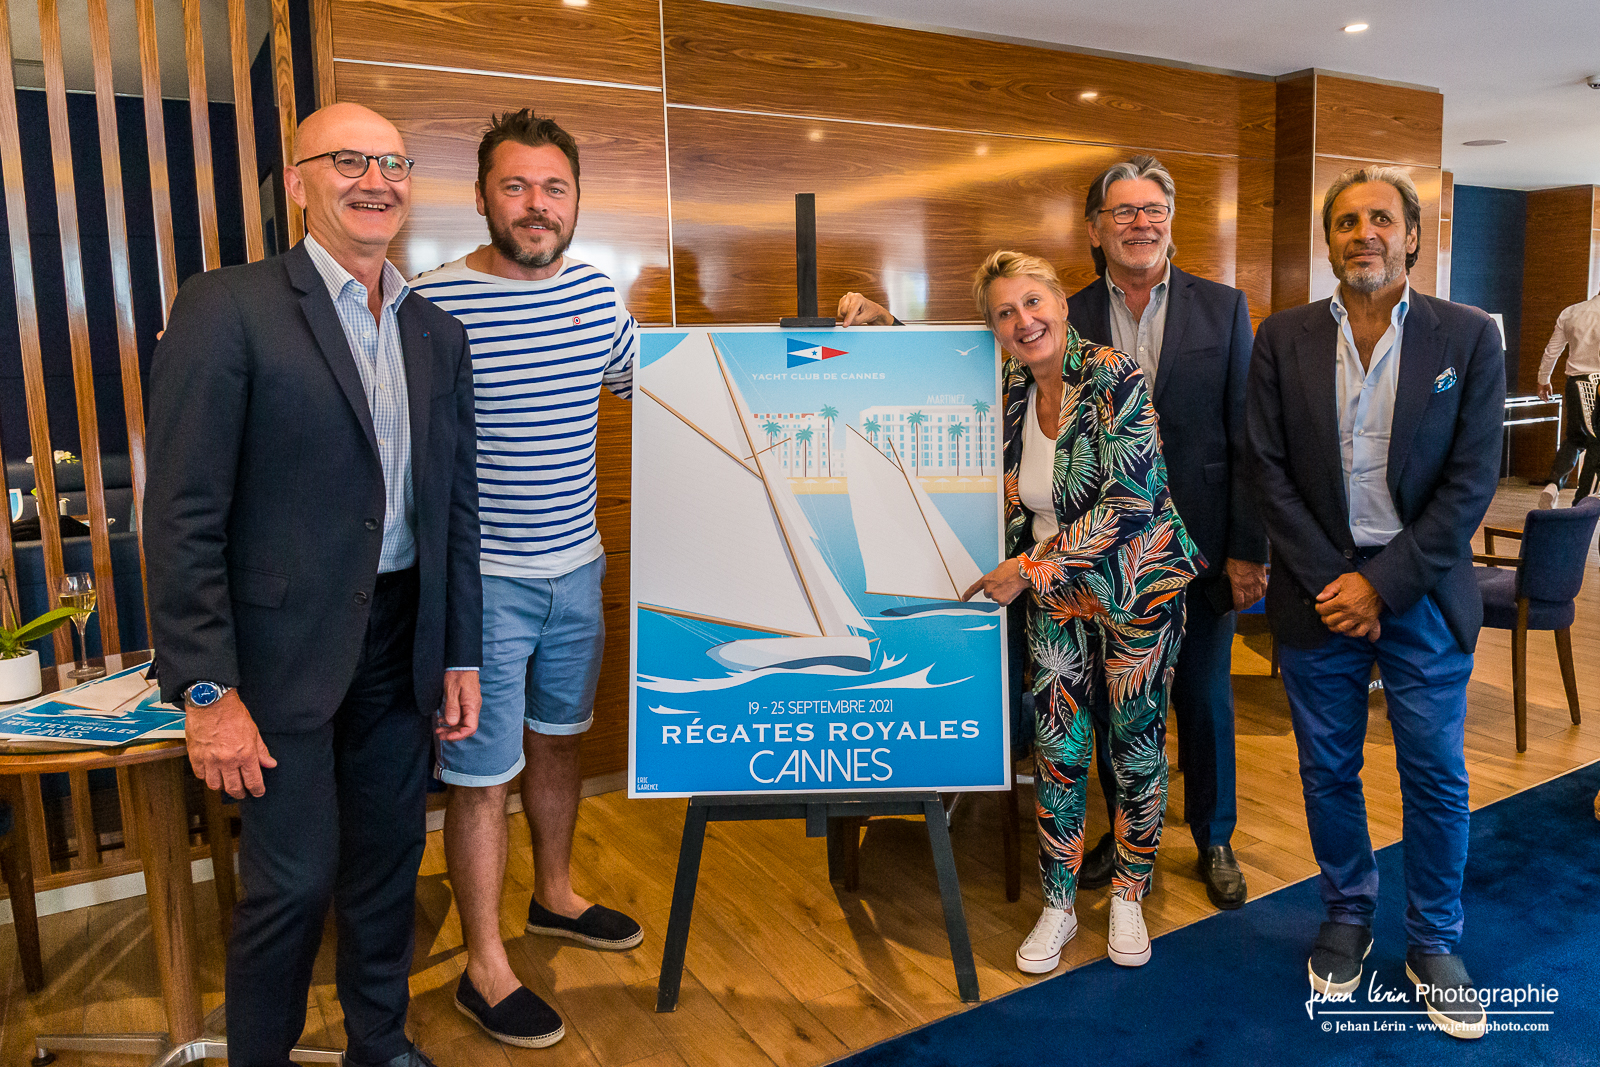 Partner Yachting Club de Cannes